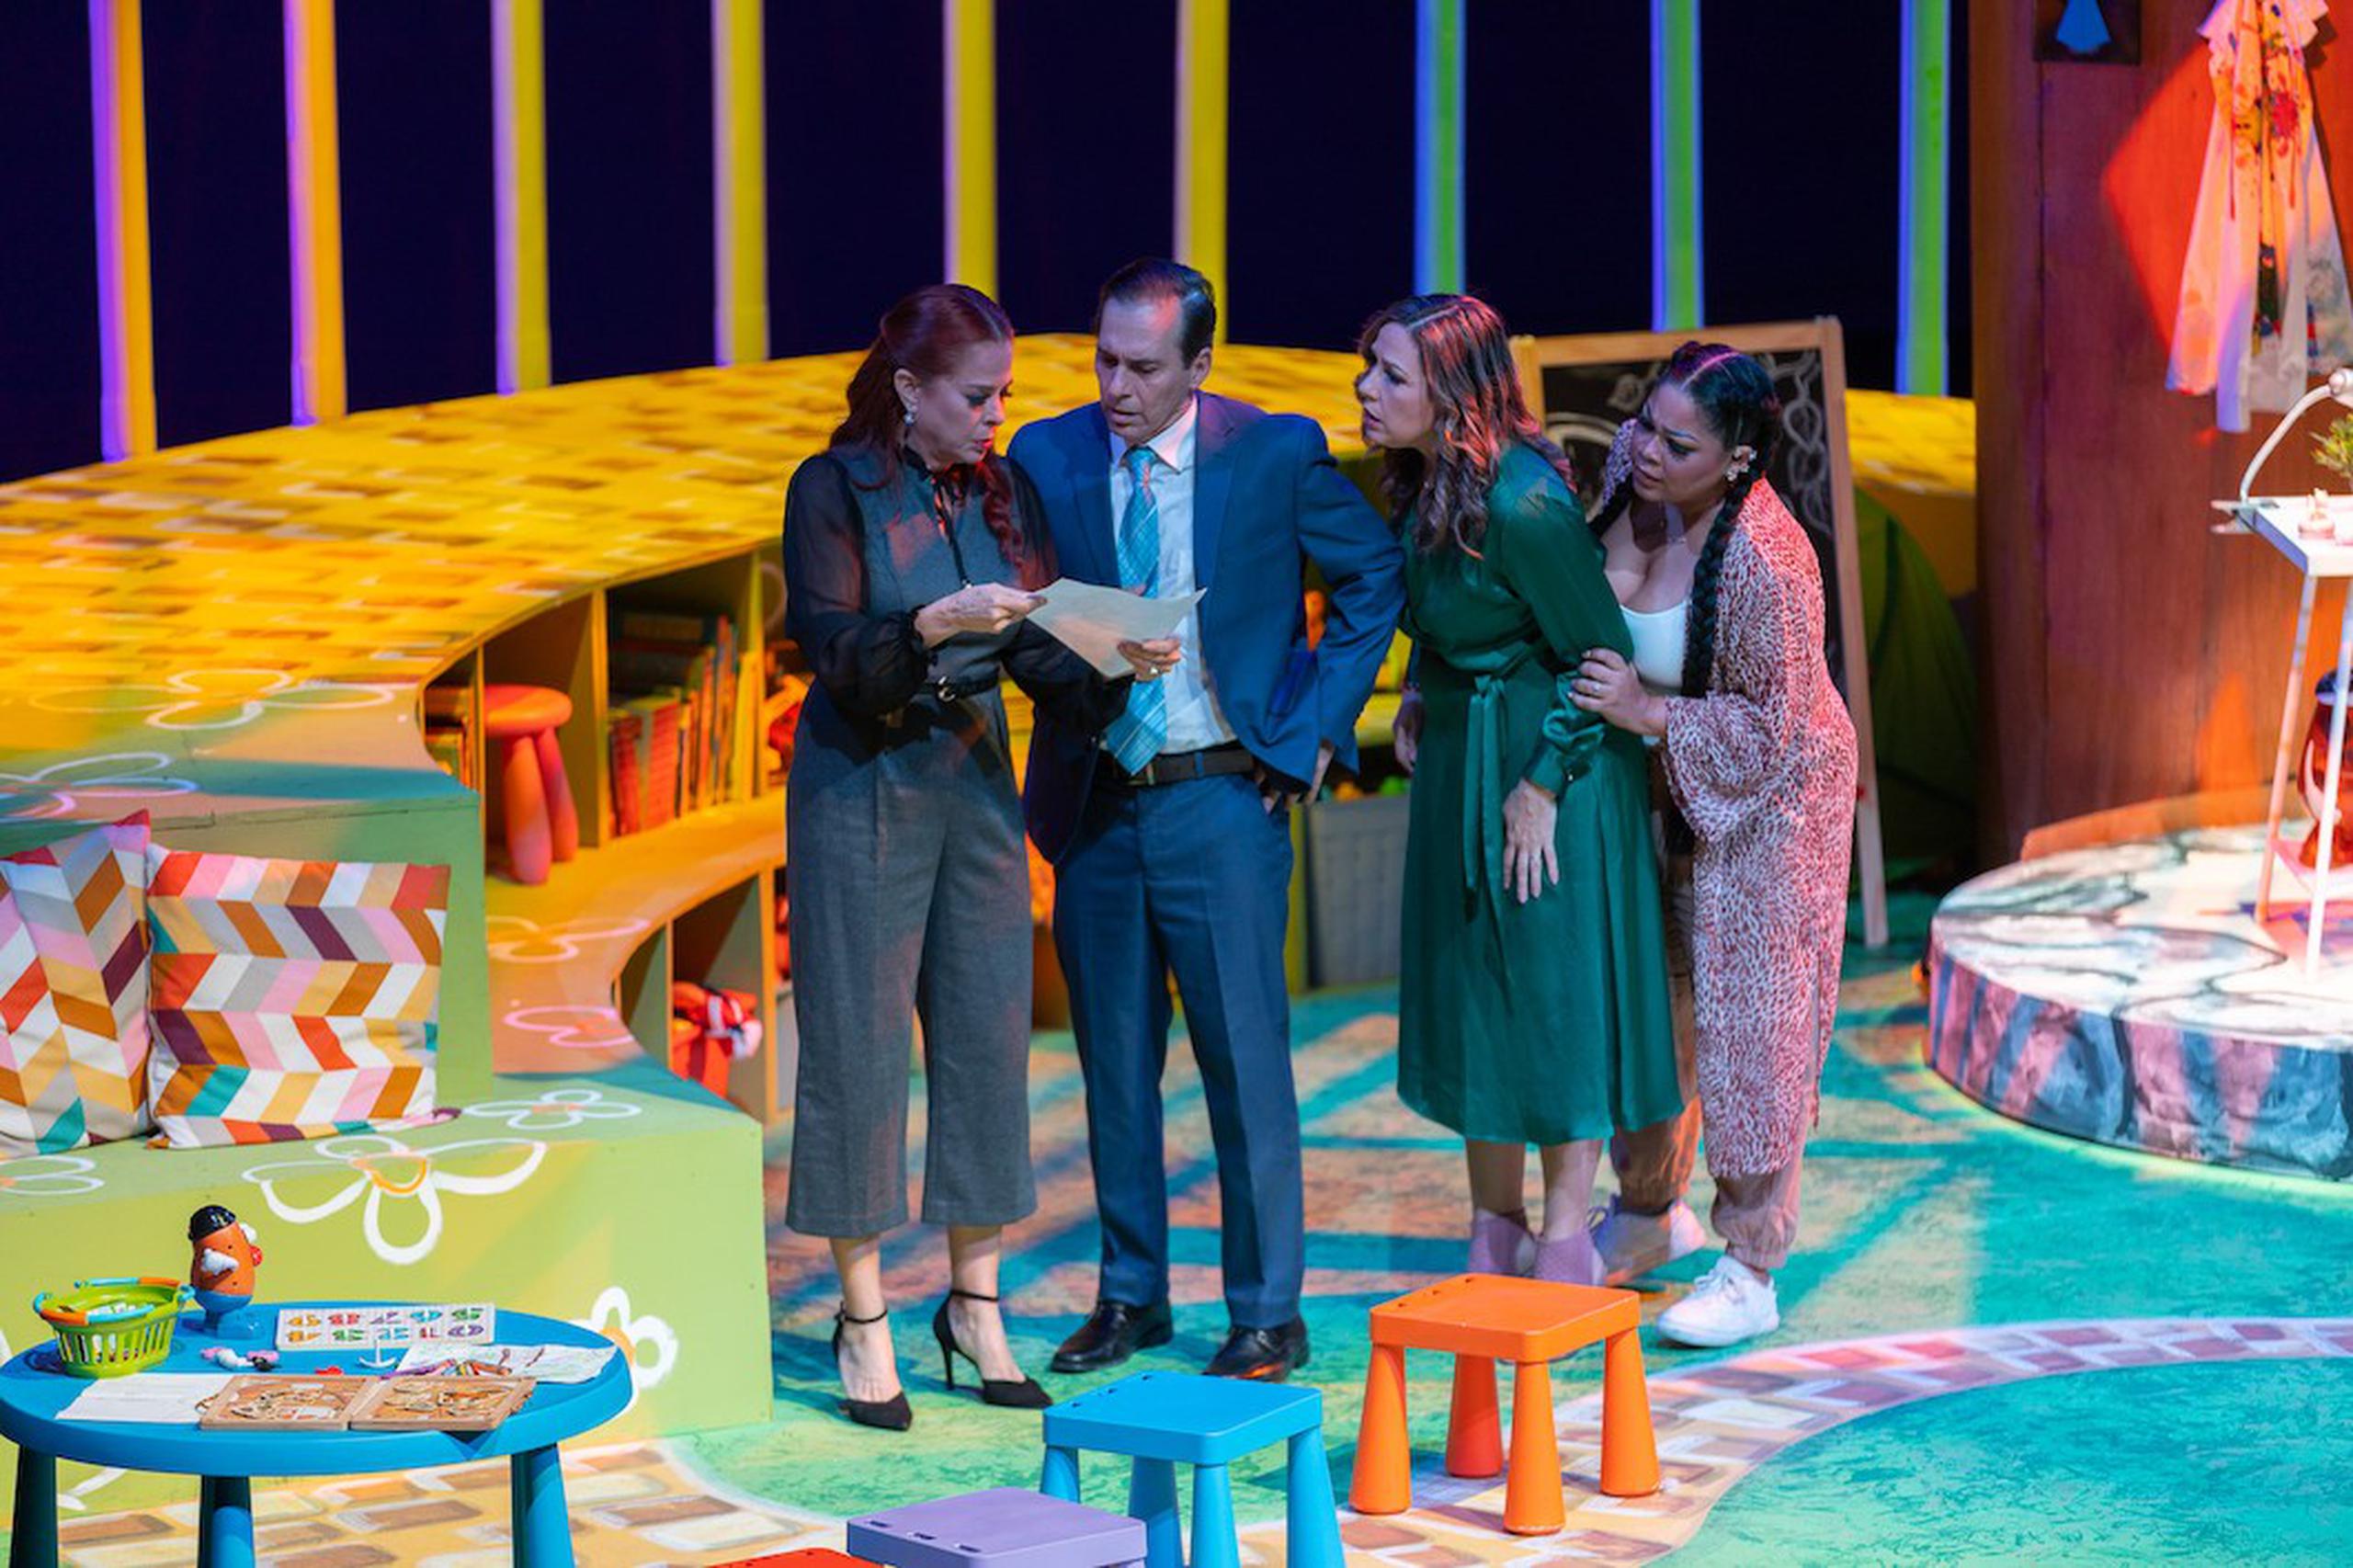 Suzette Bacó, Jorge Castro, Alfonsina Molinary y Lizmary Quintana protagonizan la pieza teatral.